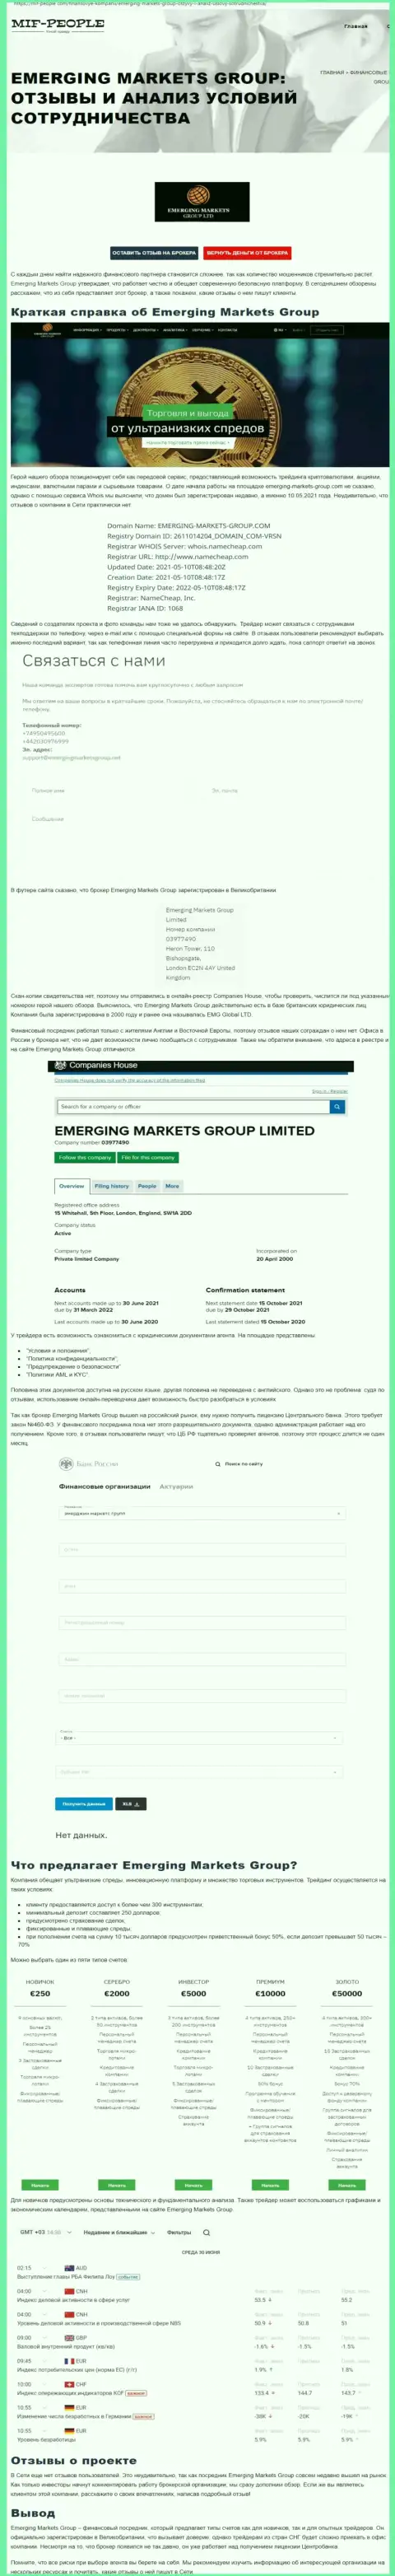 Публикация о компании Emerging Markets Group от веб-сайта mif people com